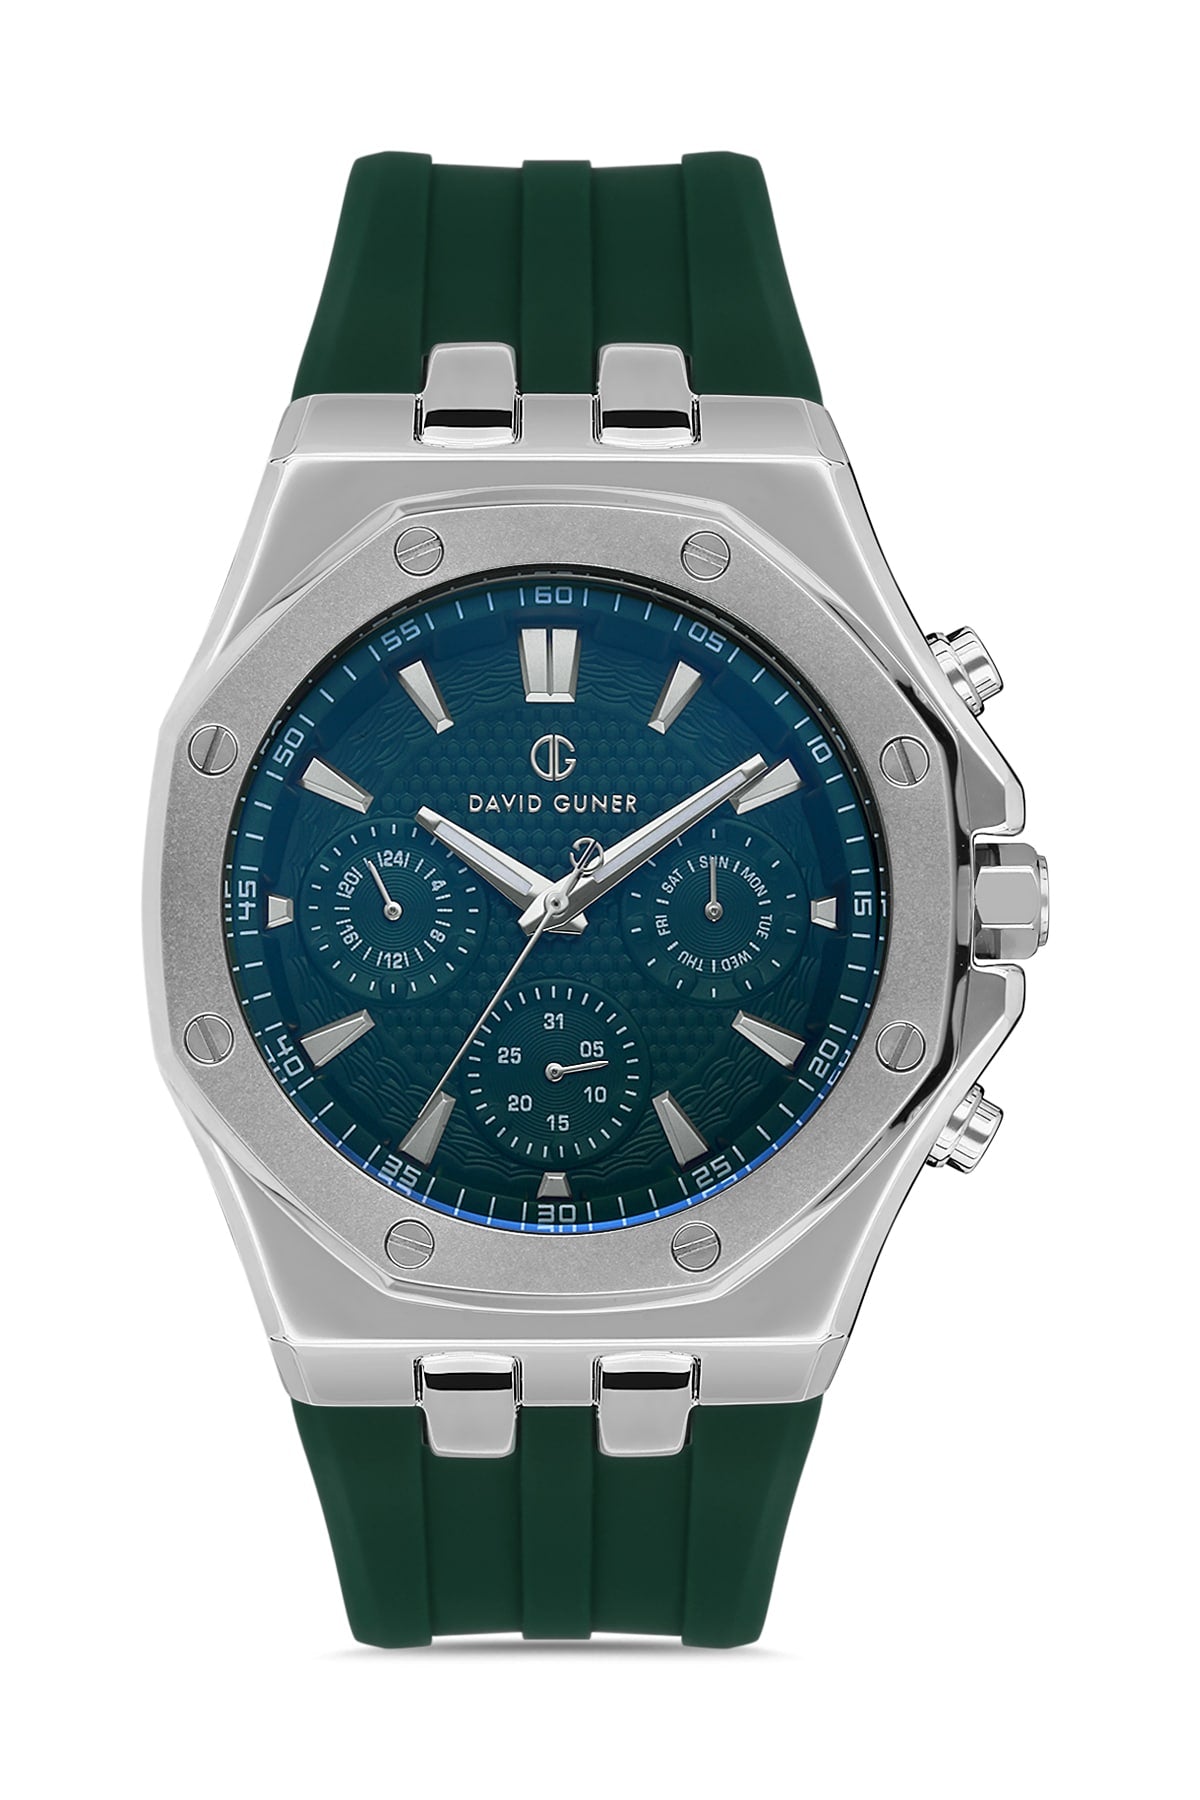 DAVID GUNER Silver Plated Men's Wristwatch with Green Silicone Strap